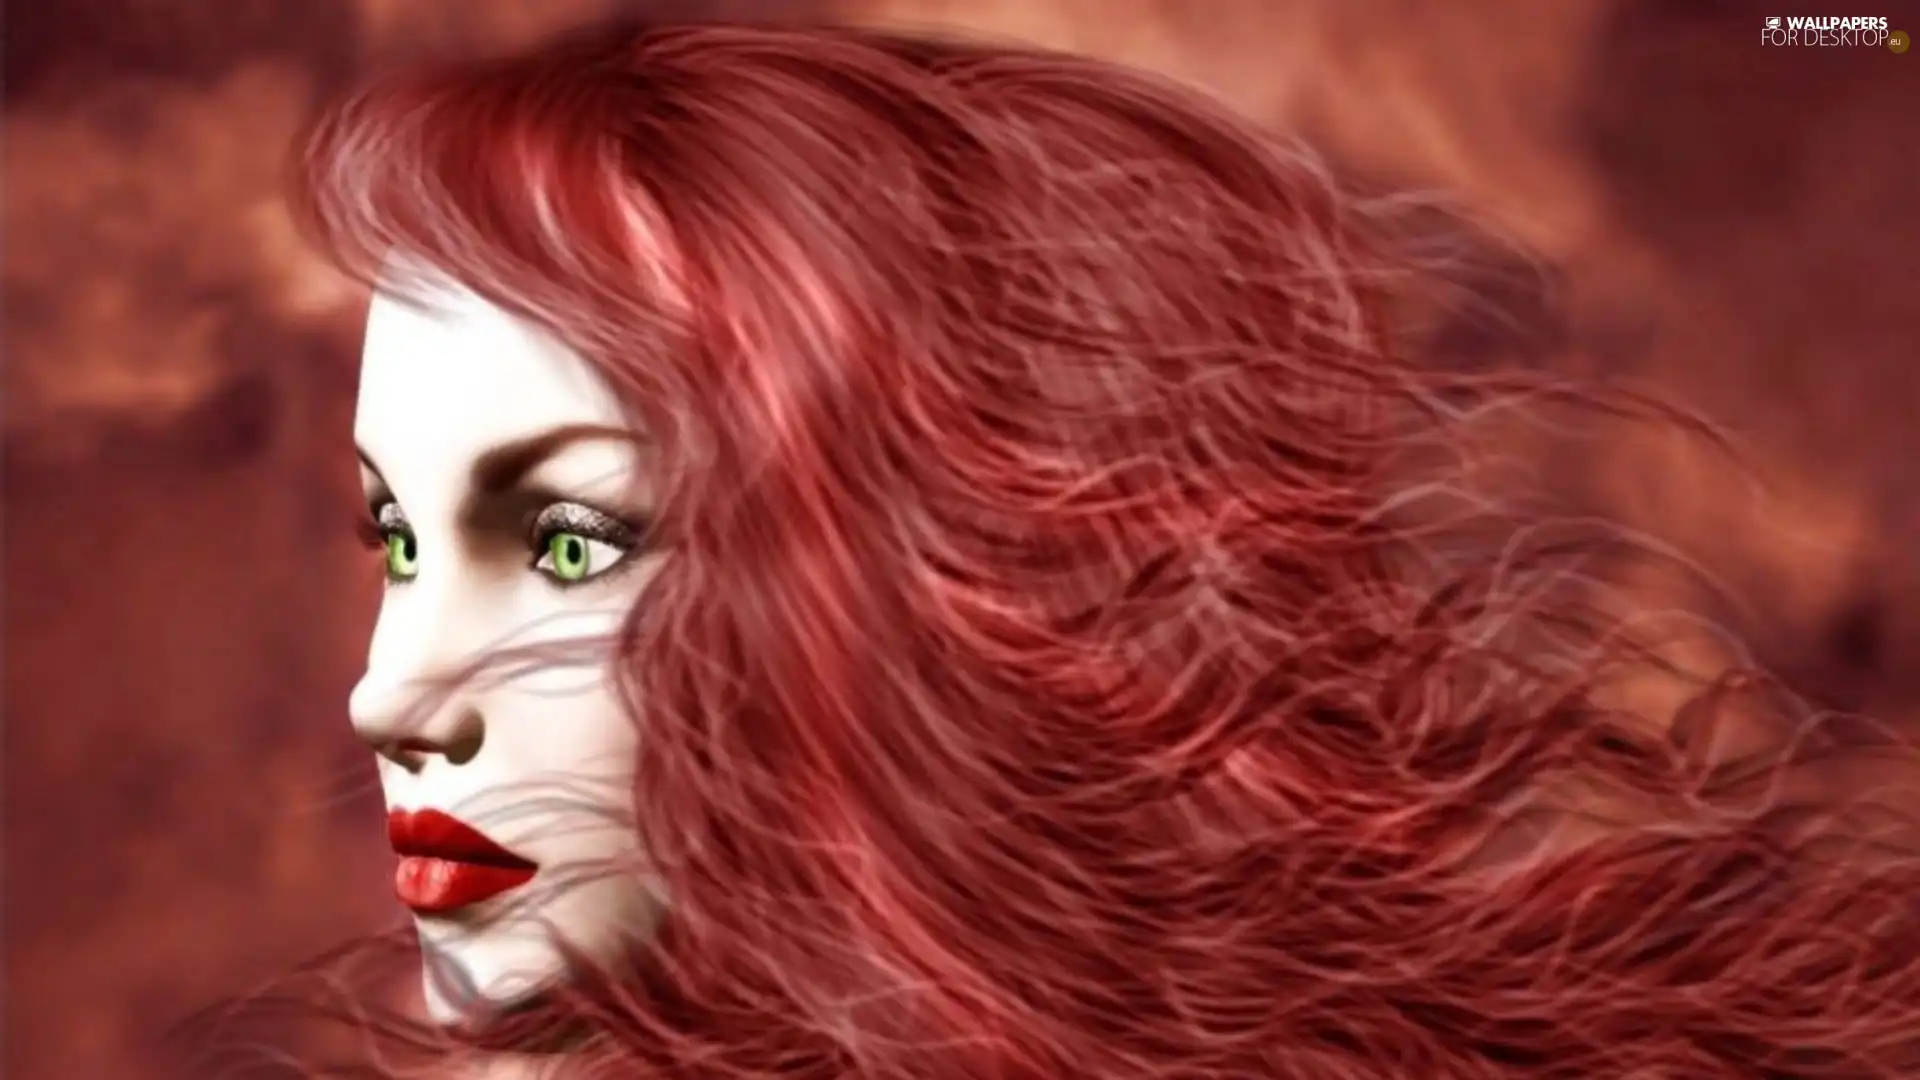 Hair, Women, Red